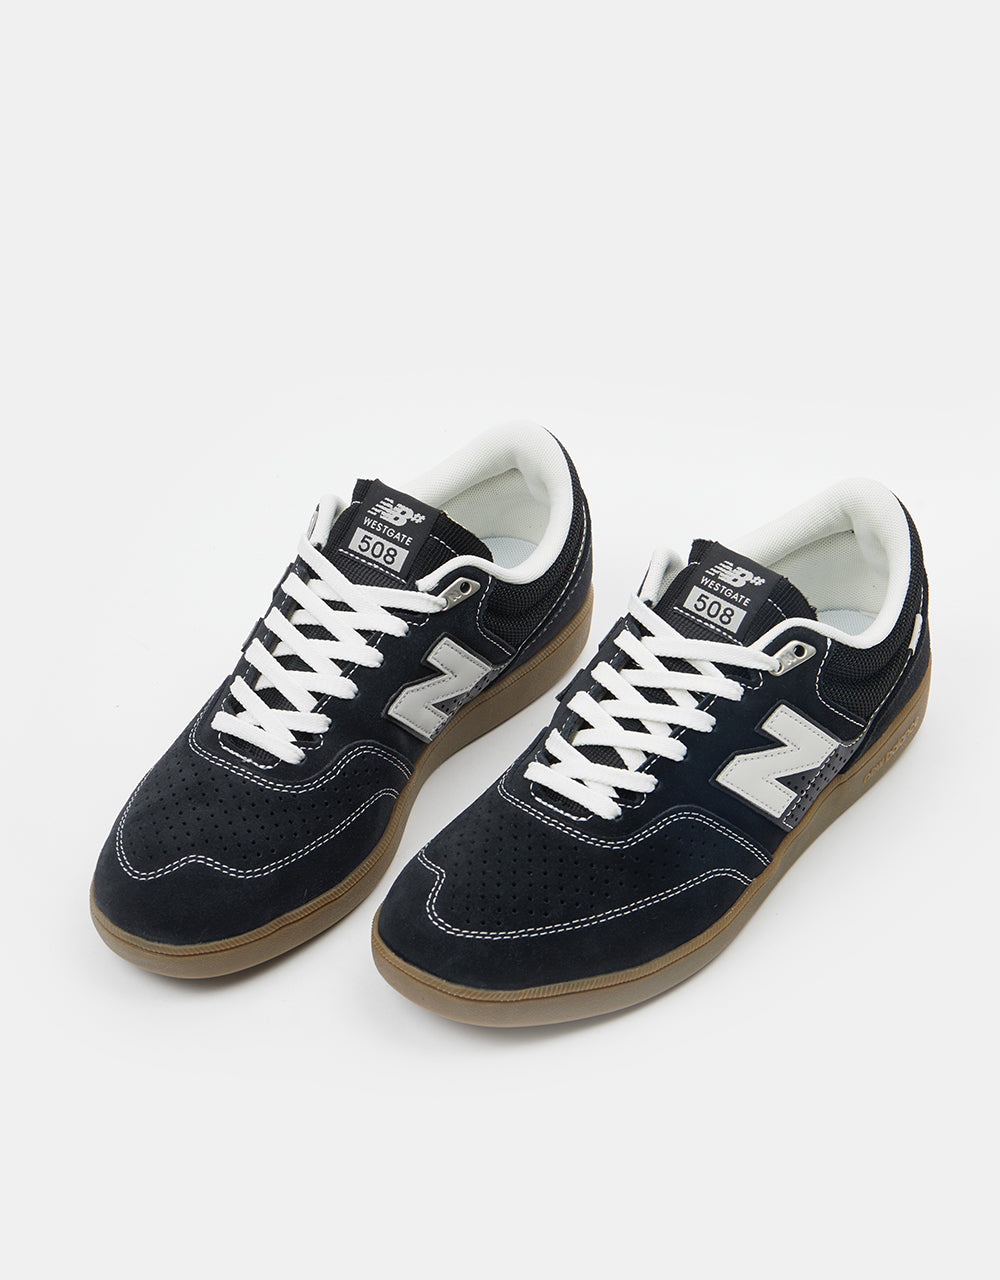 New Balance Numeric 508 Skate Shoes - Black/Gum